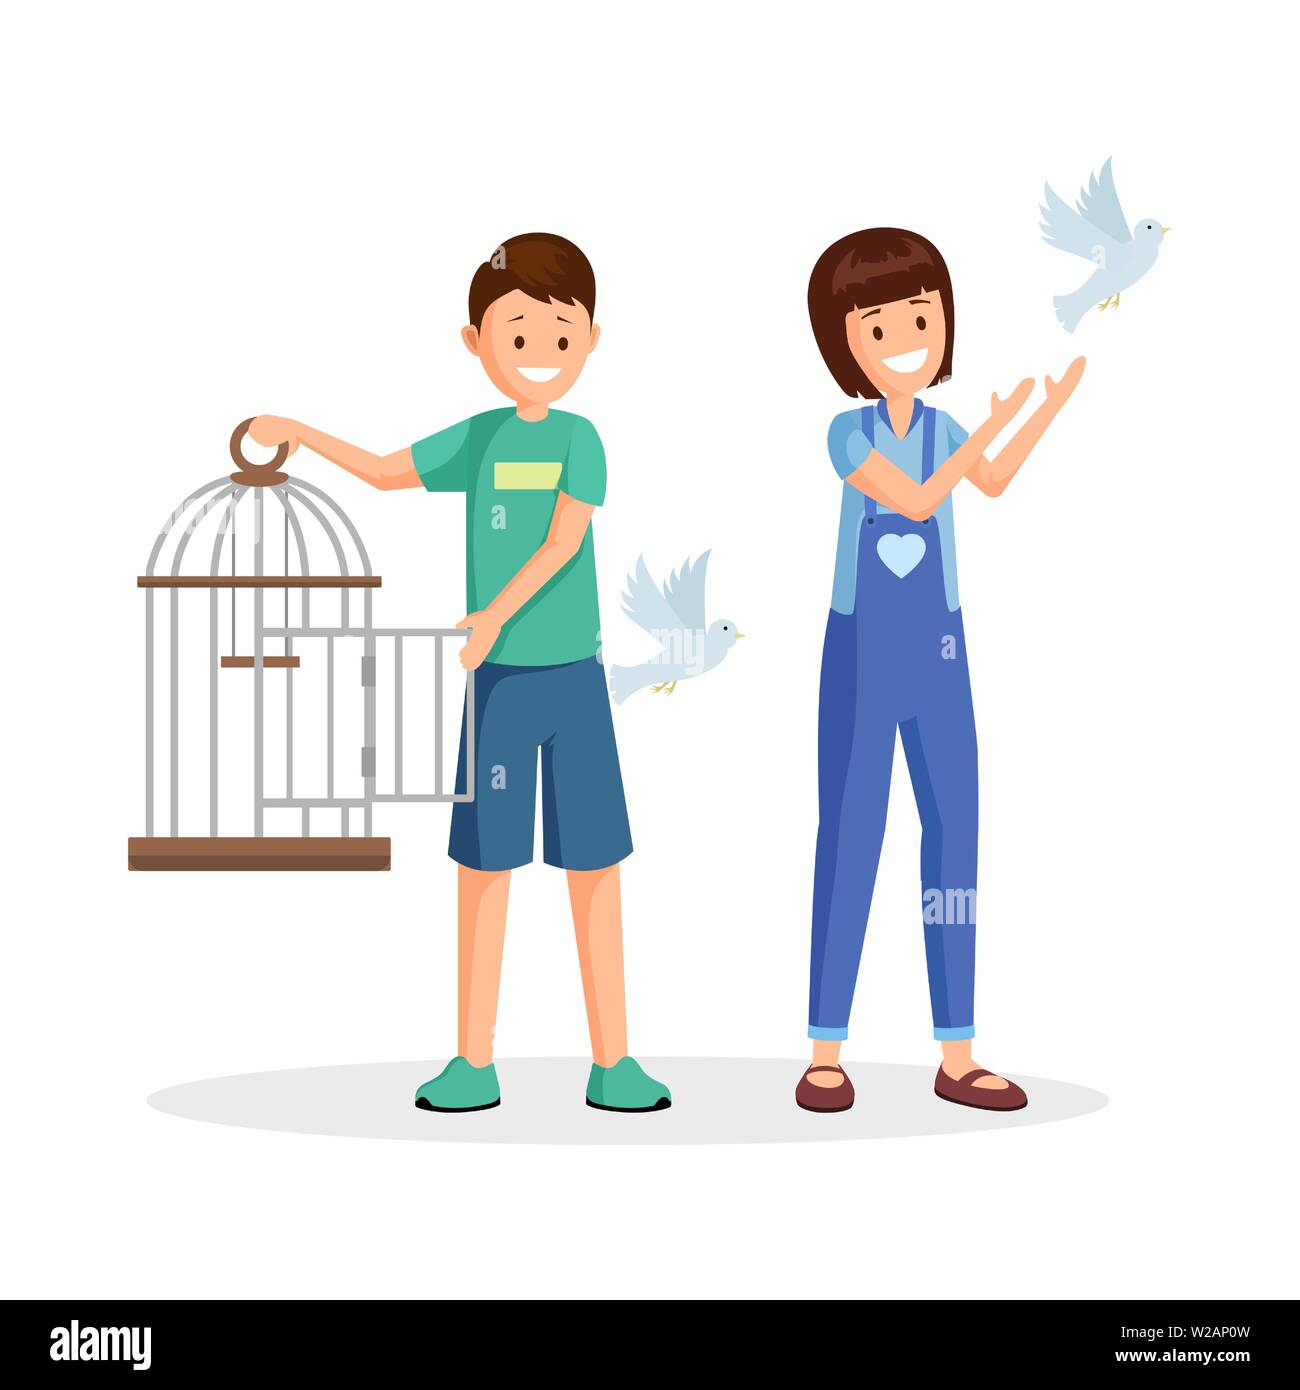 Children setting birds free vector illustration. Cartoon kids, teenagers with open birdcage liberating pigeons. Animal rights activists, volunteers fighting for wild species natural habitat Stock Vector